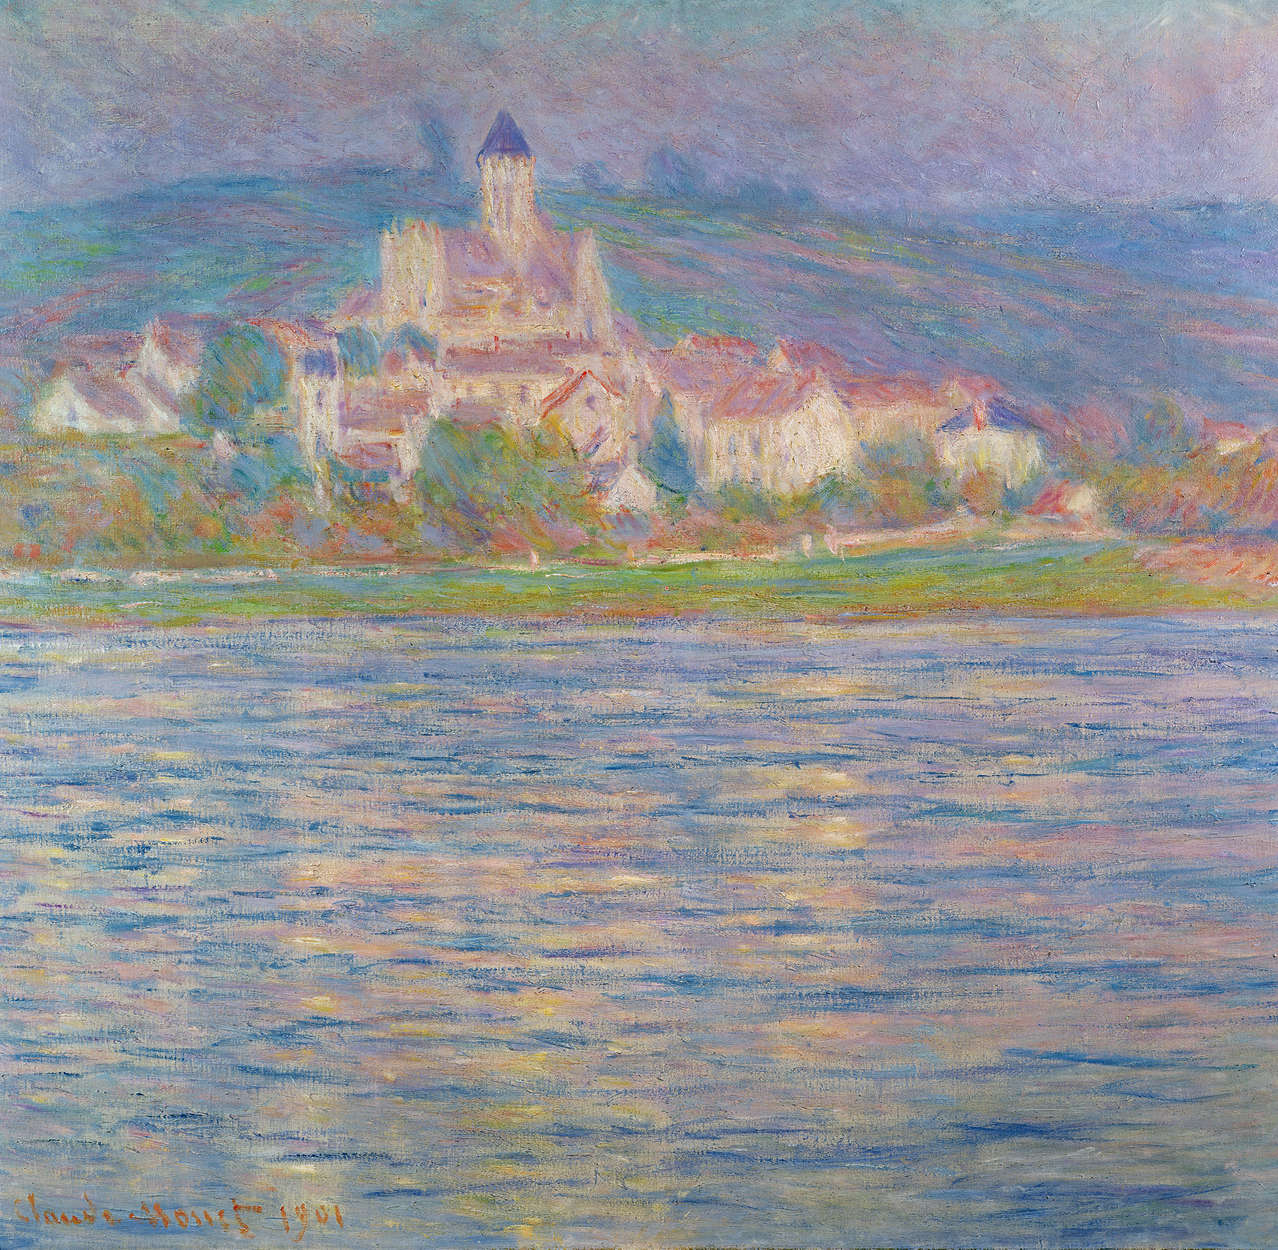             Photo wallpaper "View Vétheuil" by Claude Monet
        